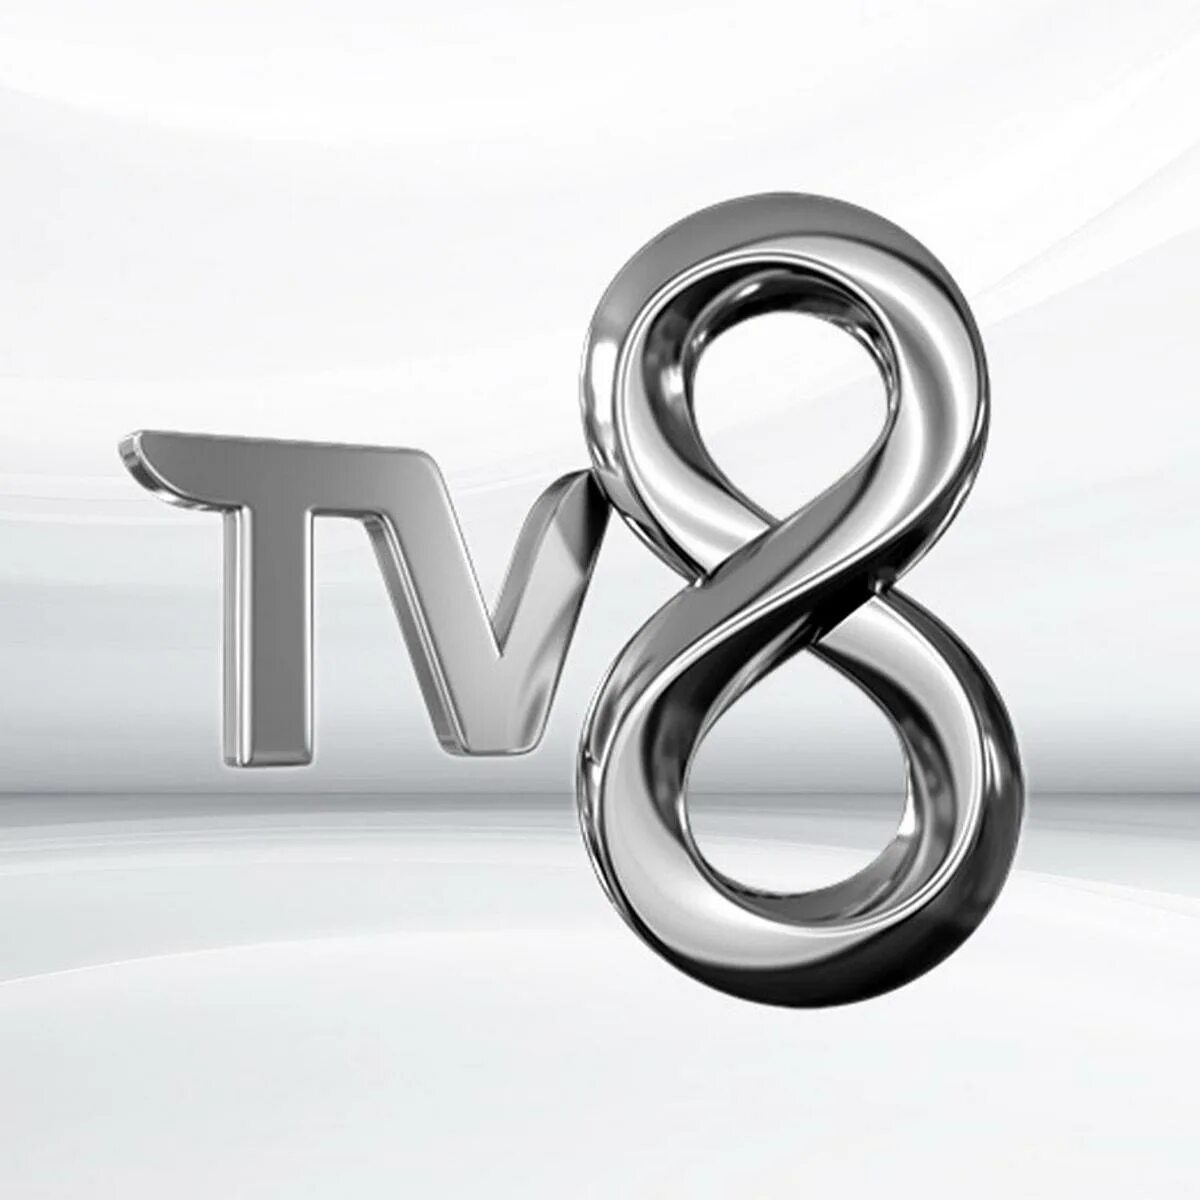 Https lang 8 com. TV 8. 8 TV logo. Tv8 TV.